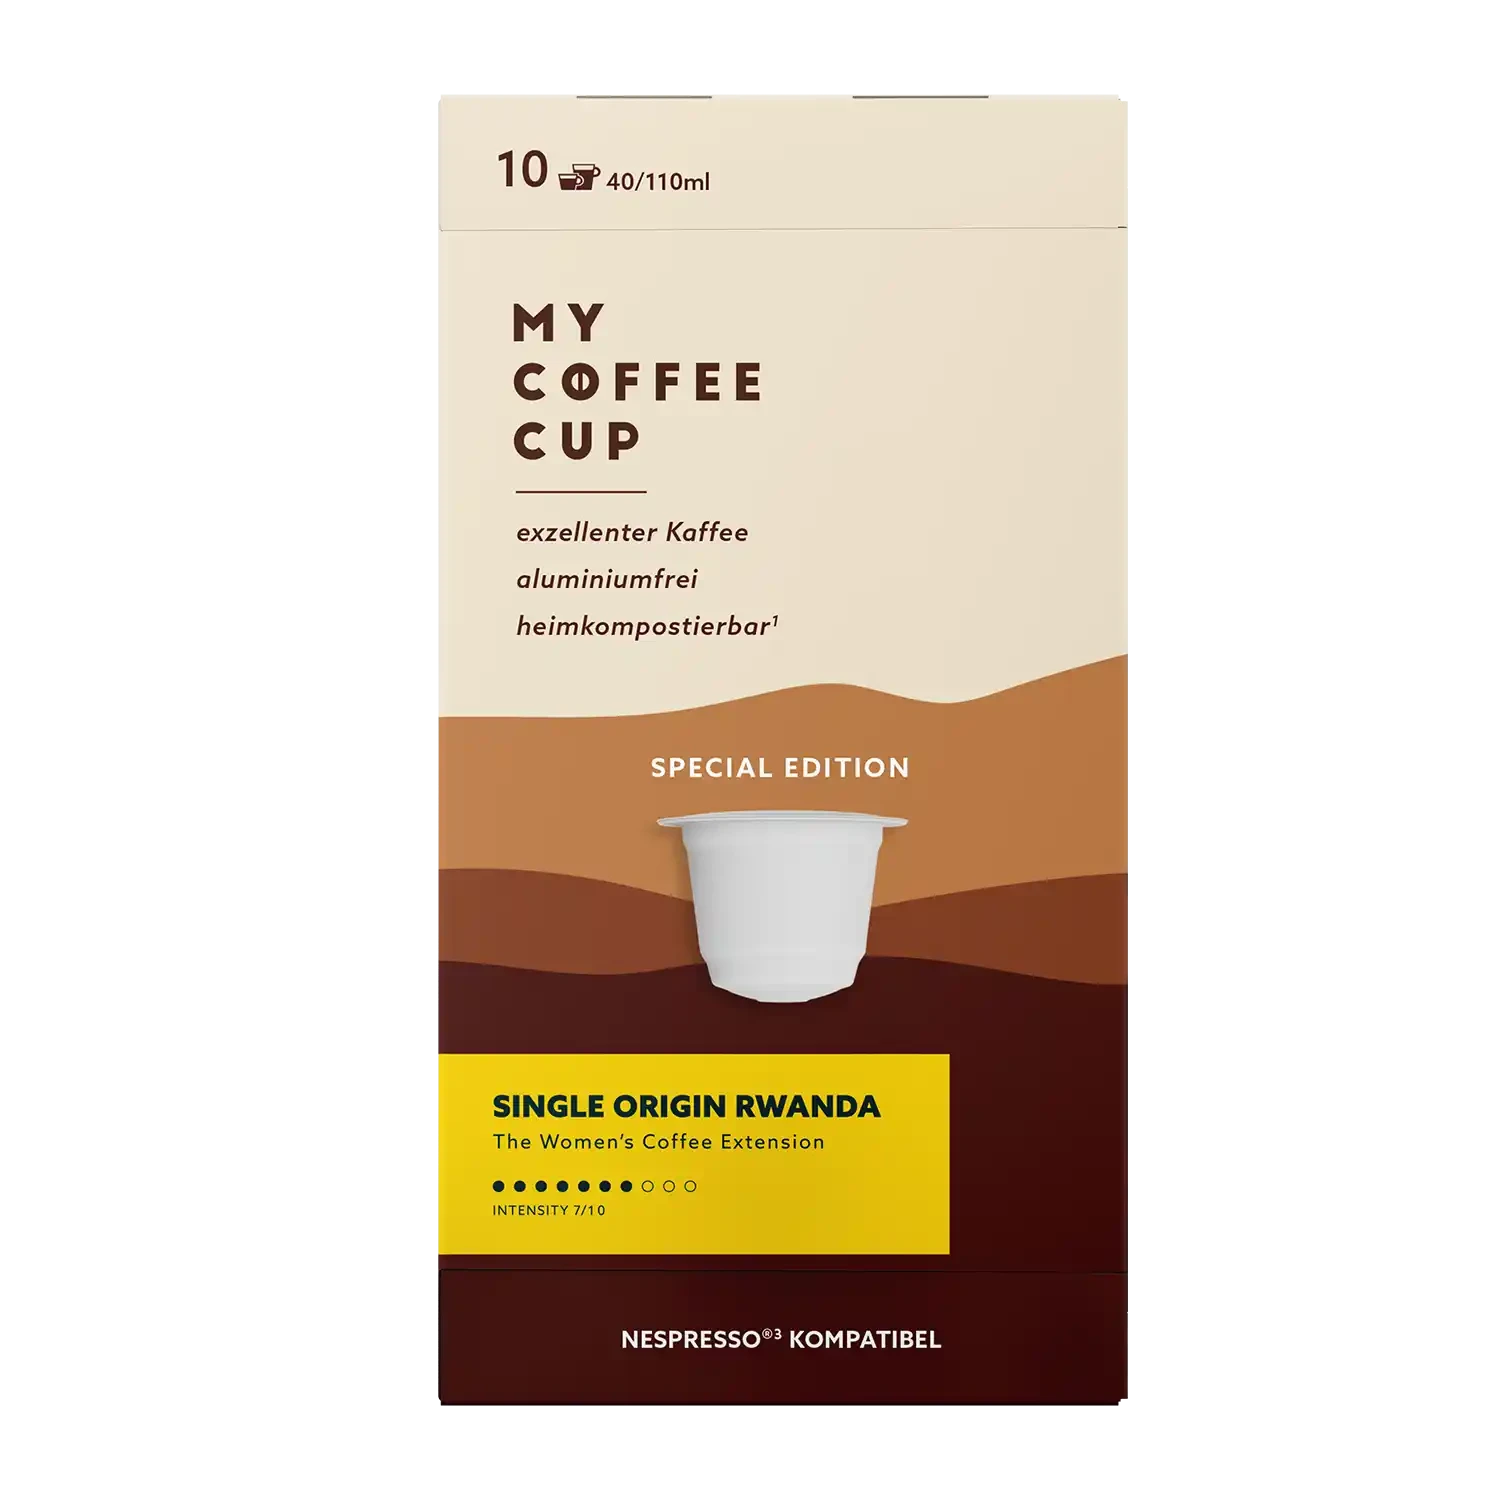 Nespresso kompatible Kapseln - single origin rwanda -  MyCoffeeCup.ch